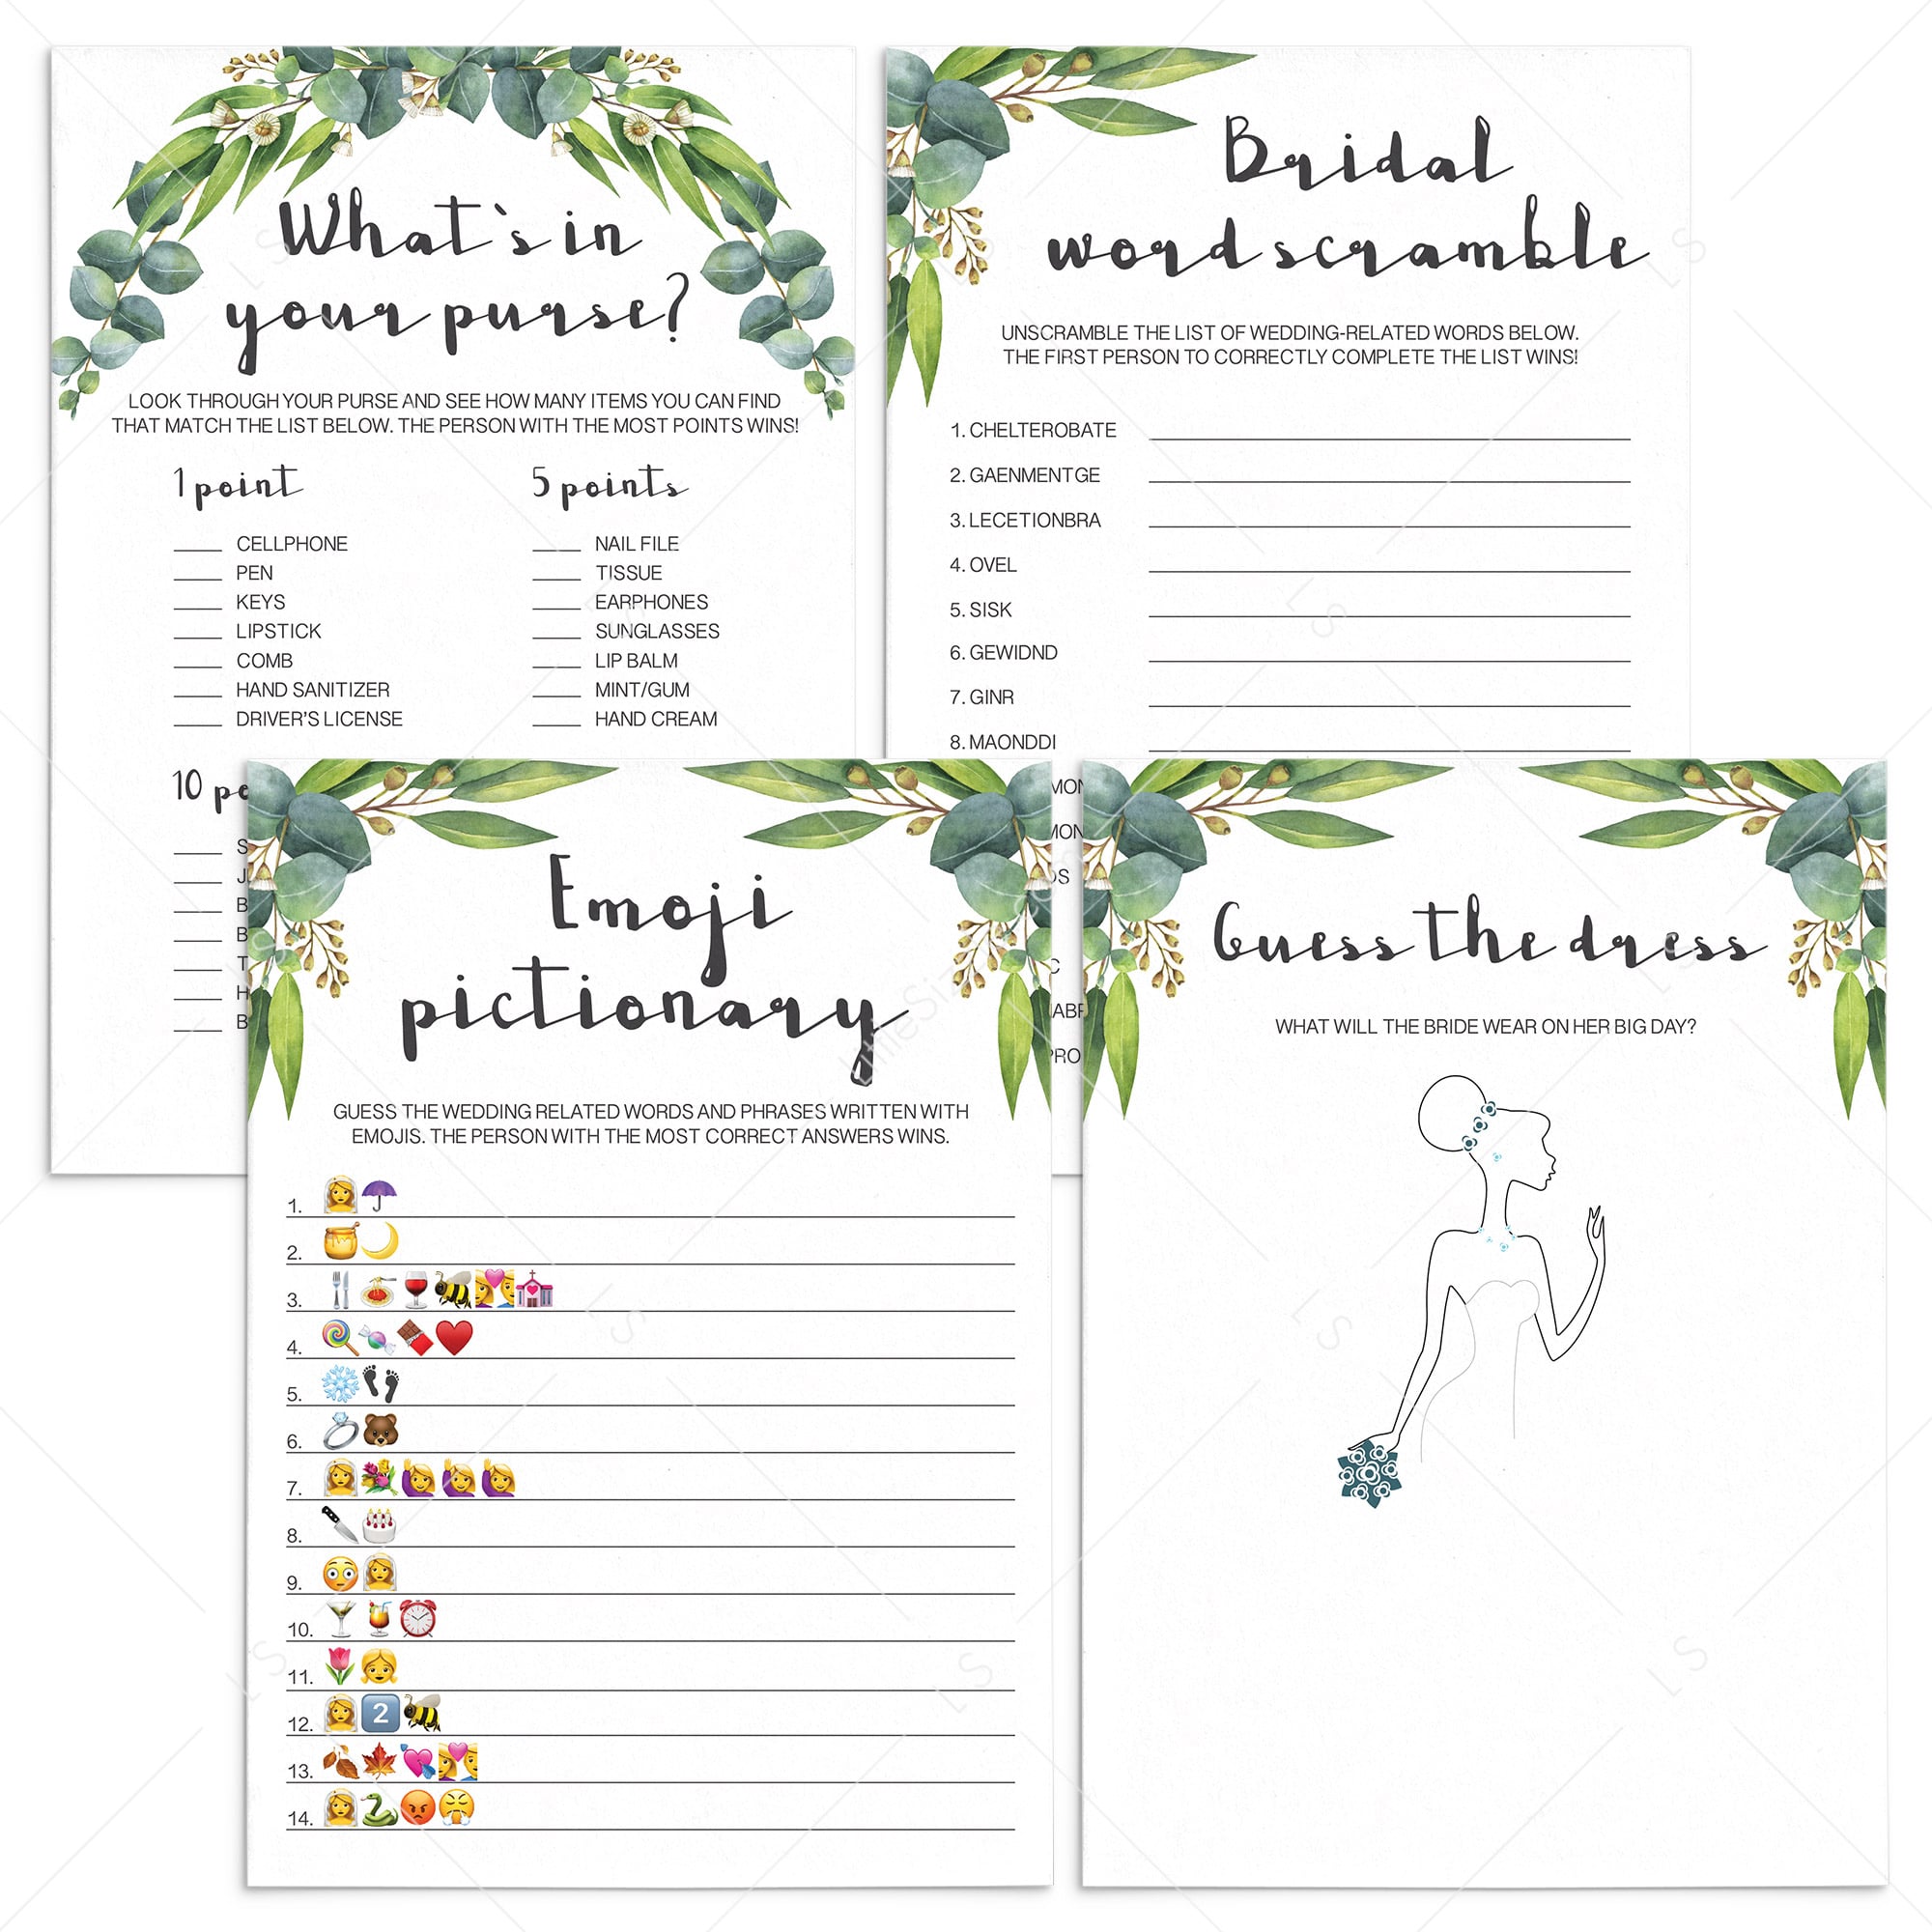 botanical bridal shower games package printables by LittleSizzle